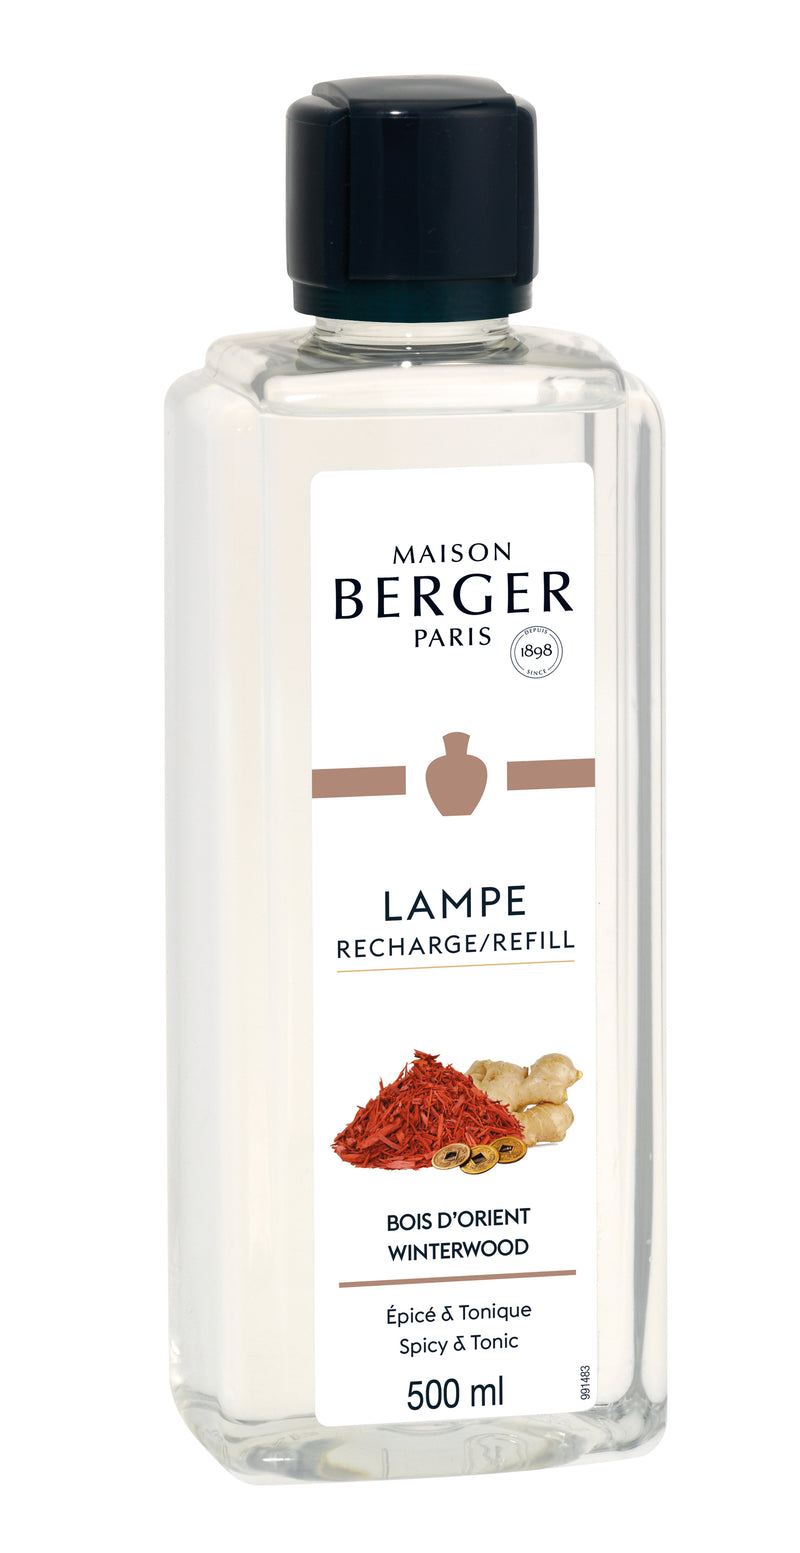 Lampe Berger huisparfum 500 ml - Winterwood / Bois d’orient